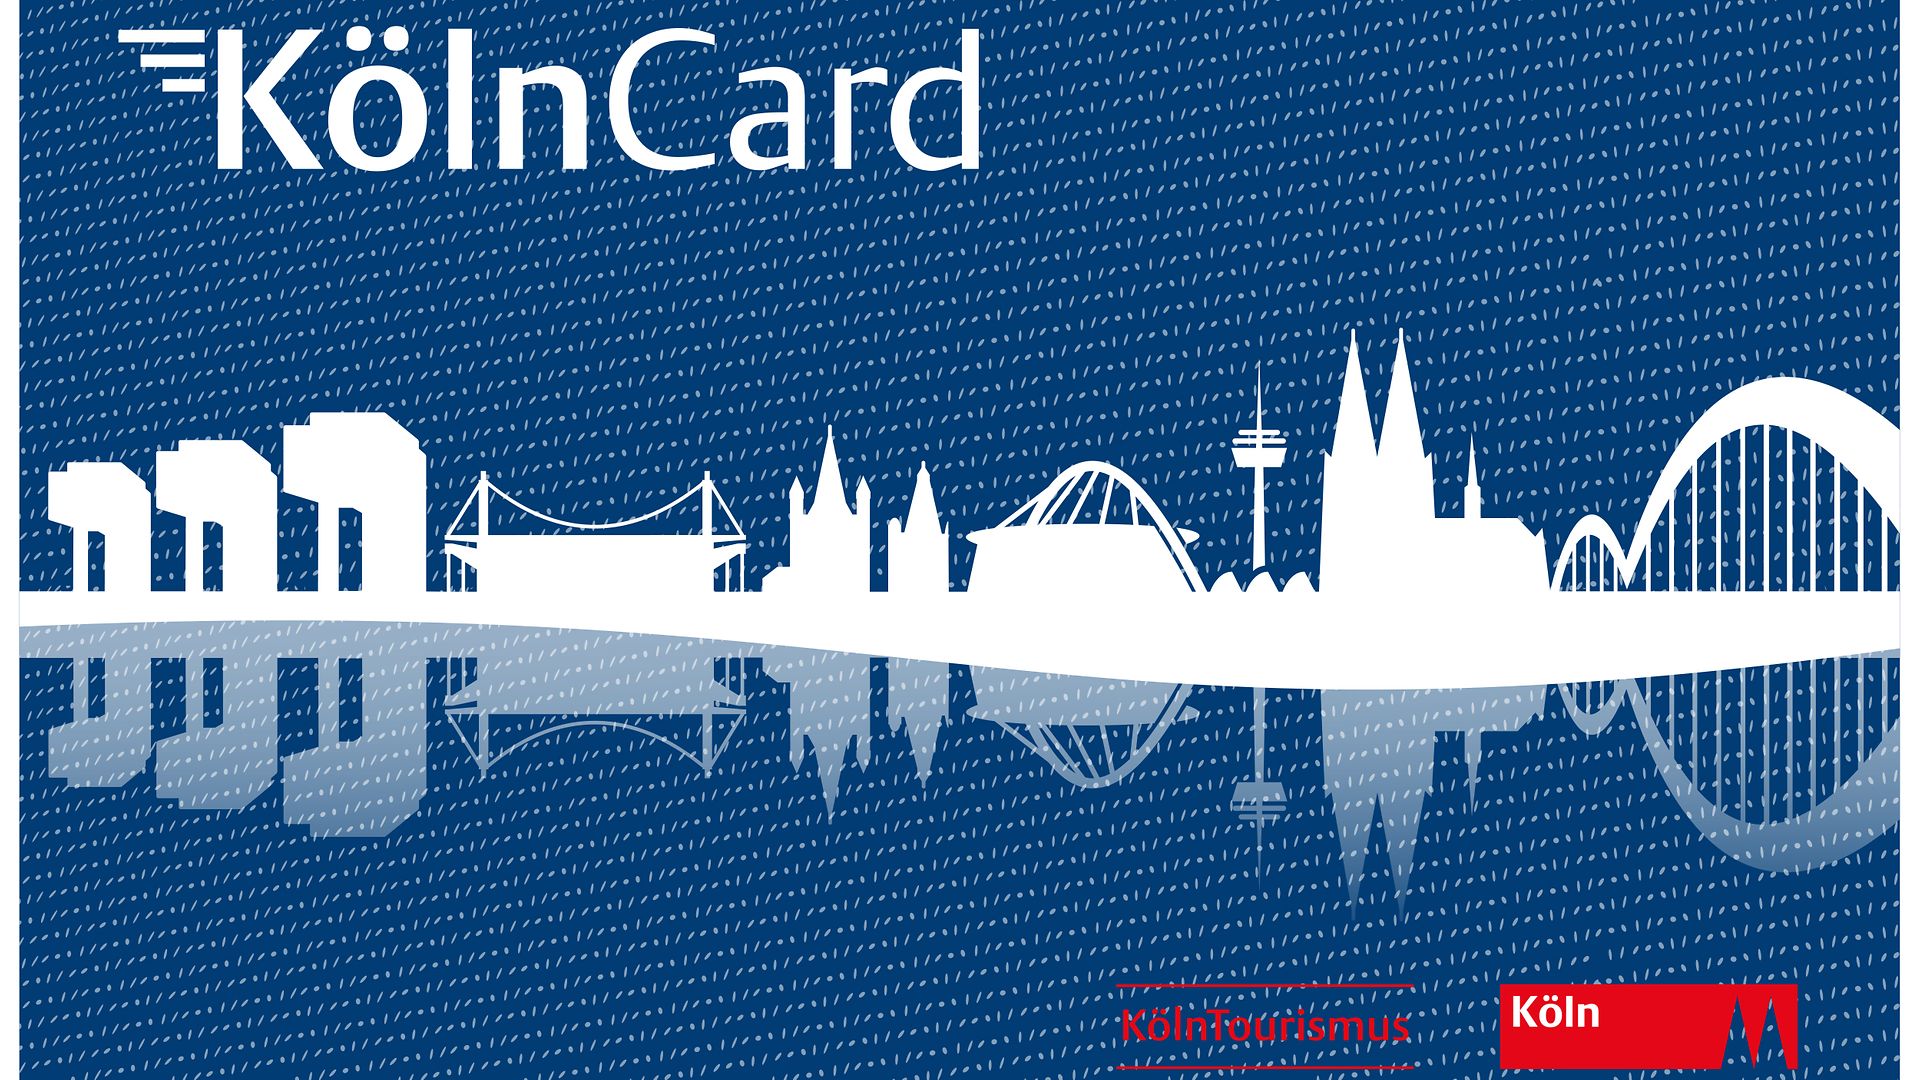 Abbildung Köln Card